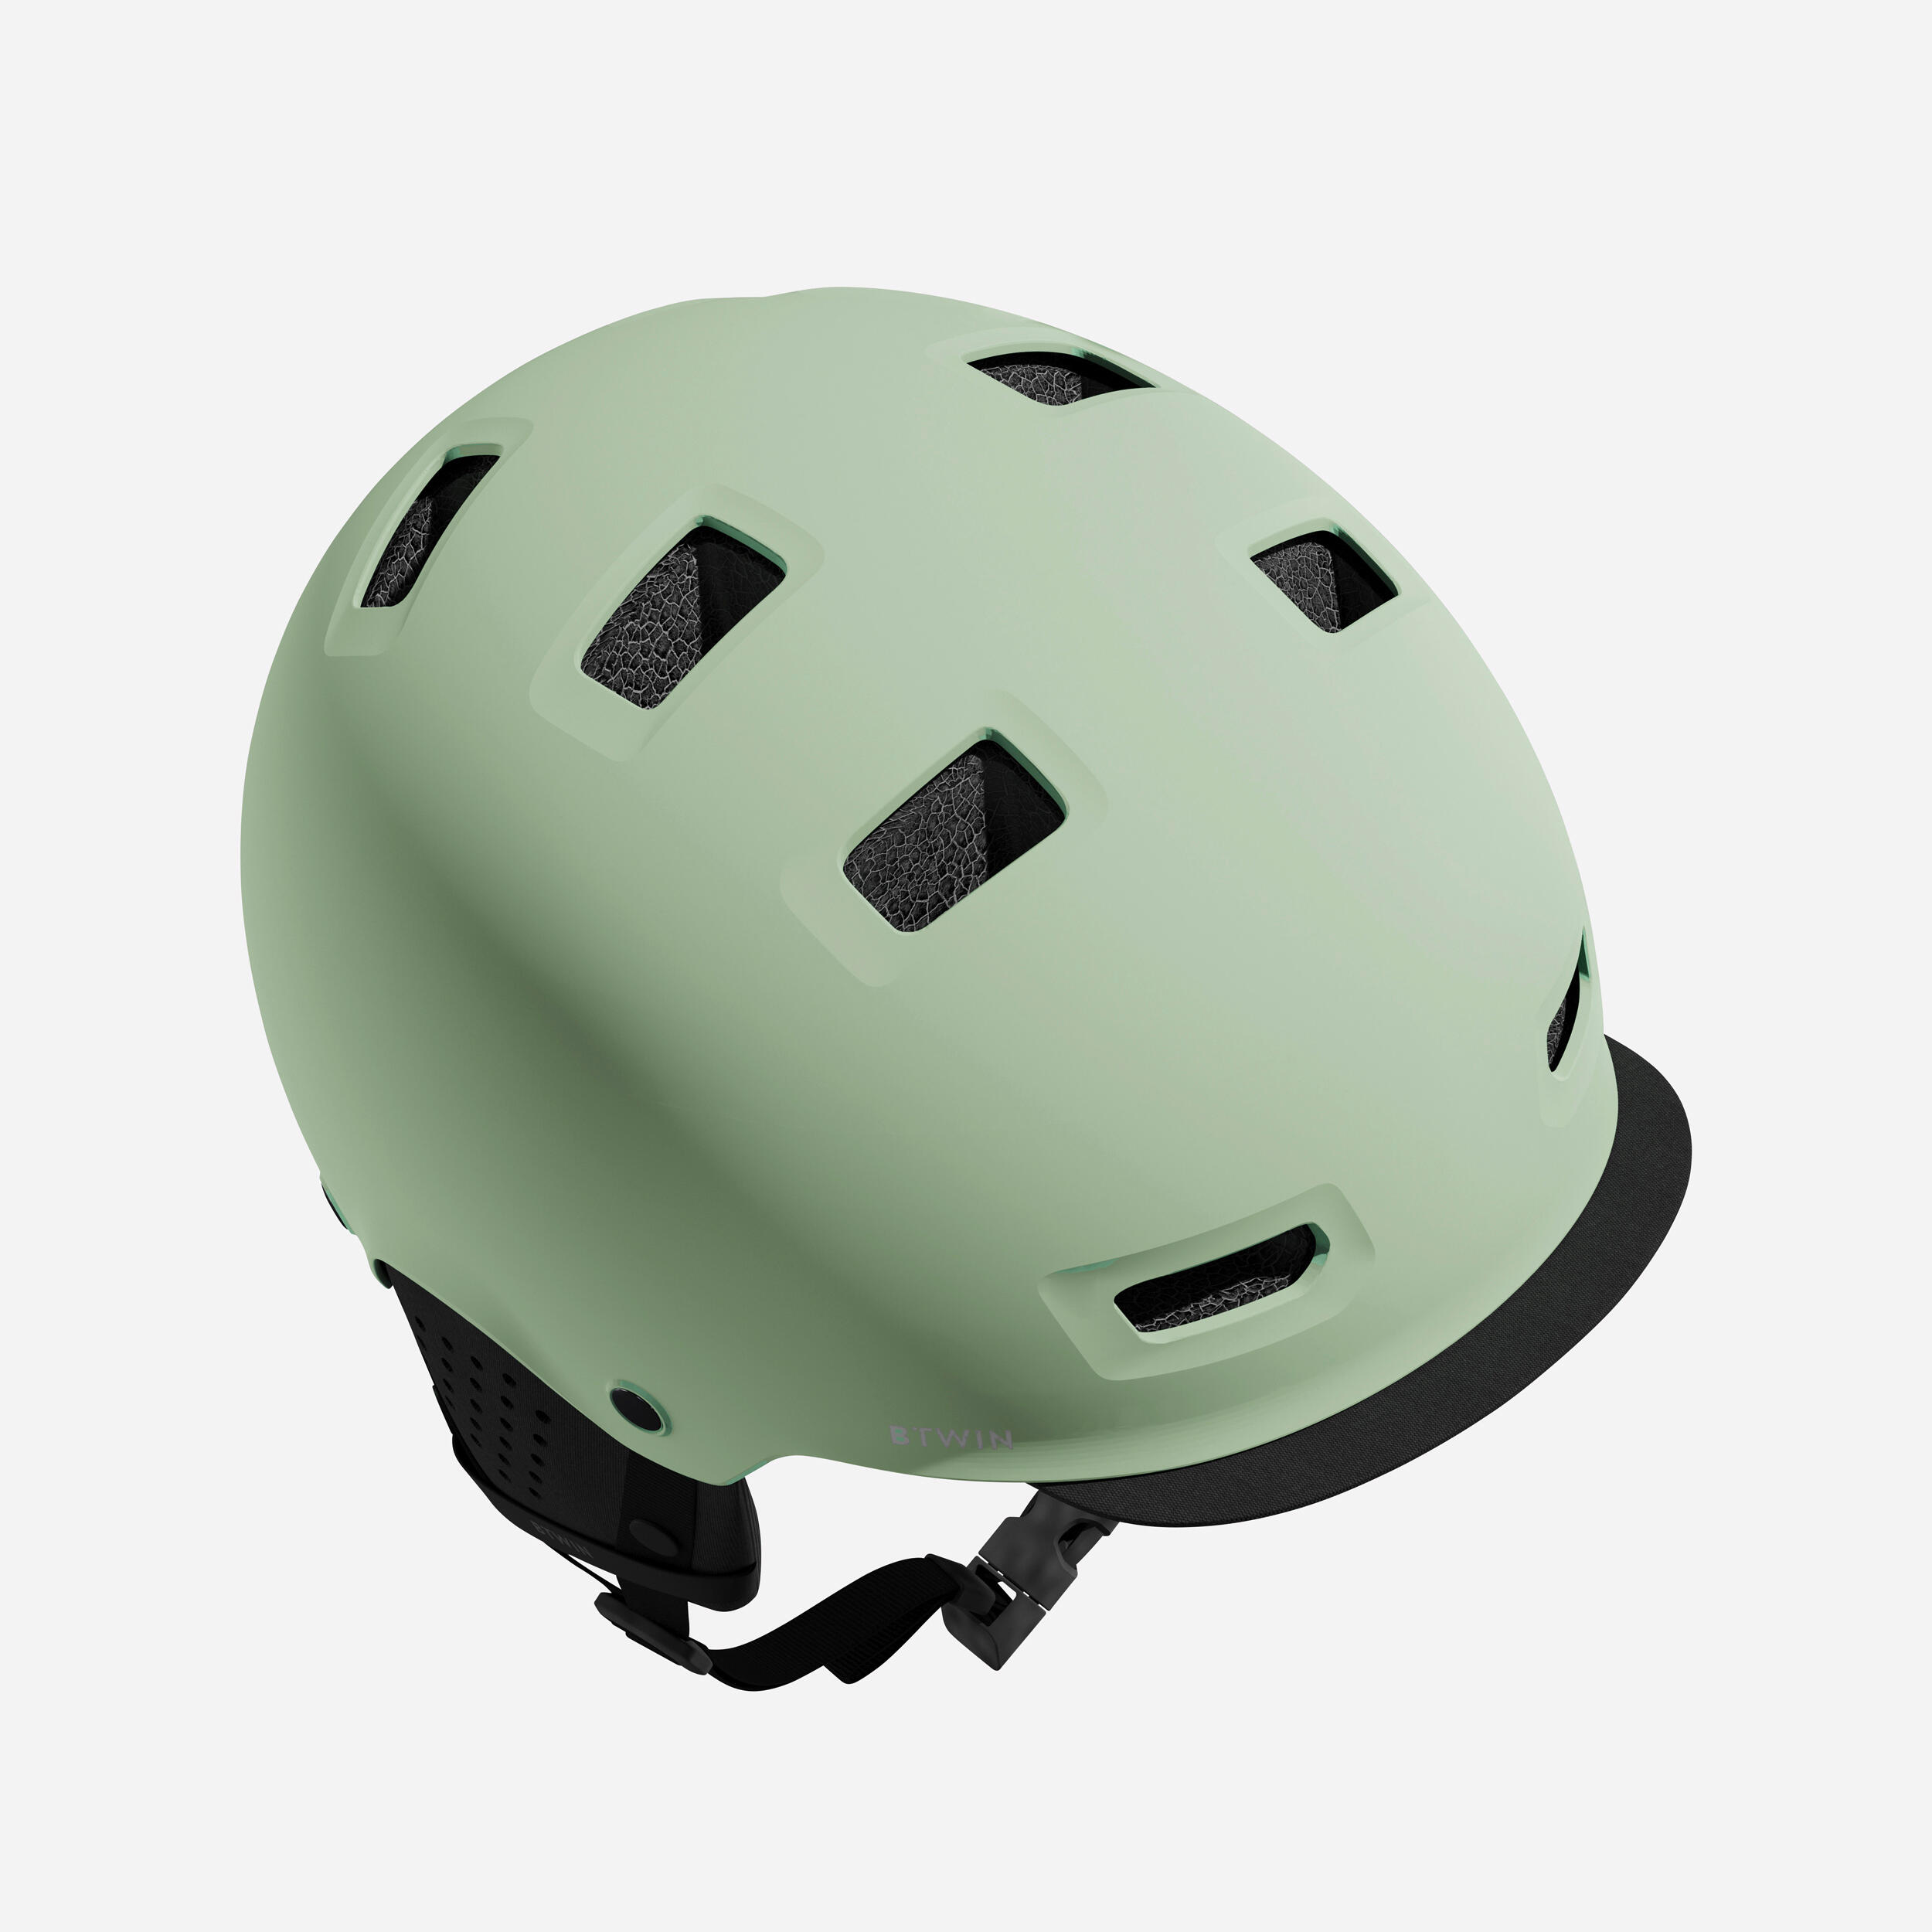 City Cycling Bowl Helmet 500 - Rosemary Green 1/11